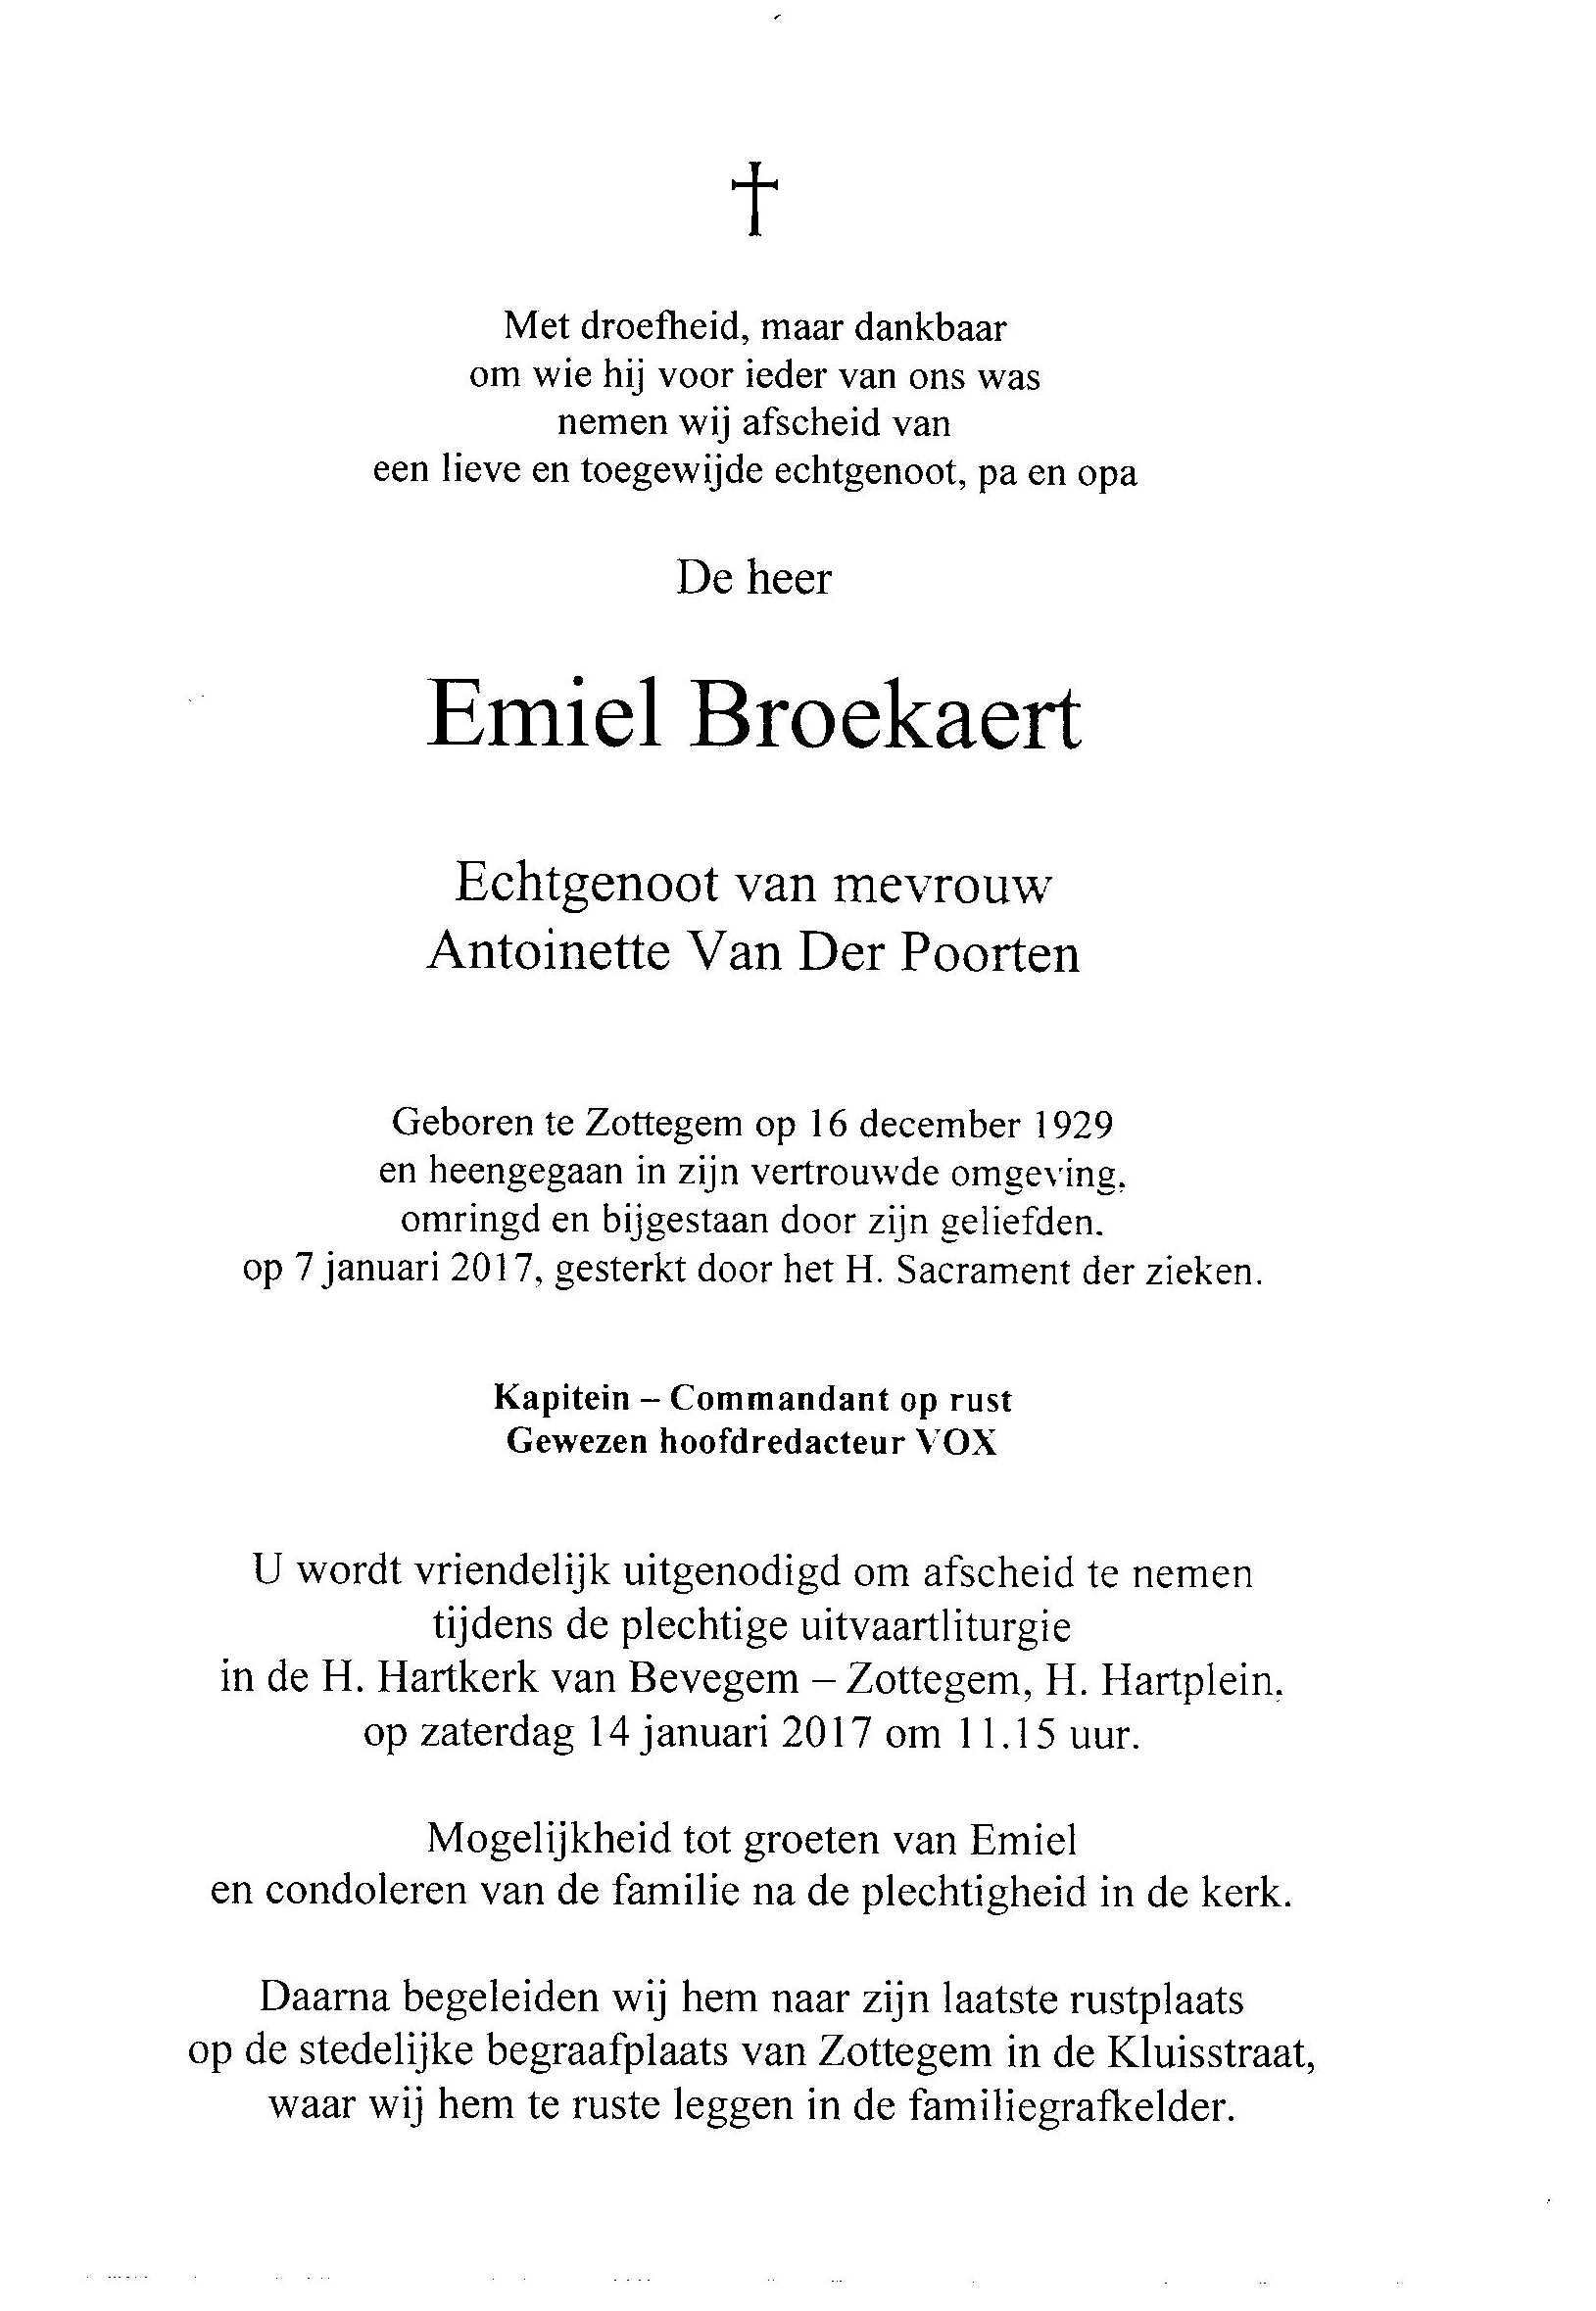 Emiel Brouckaert 1